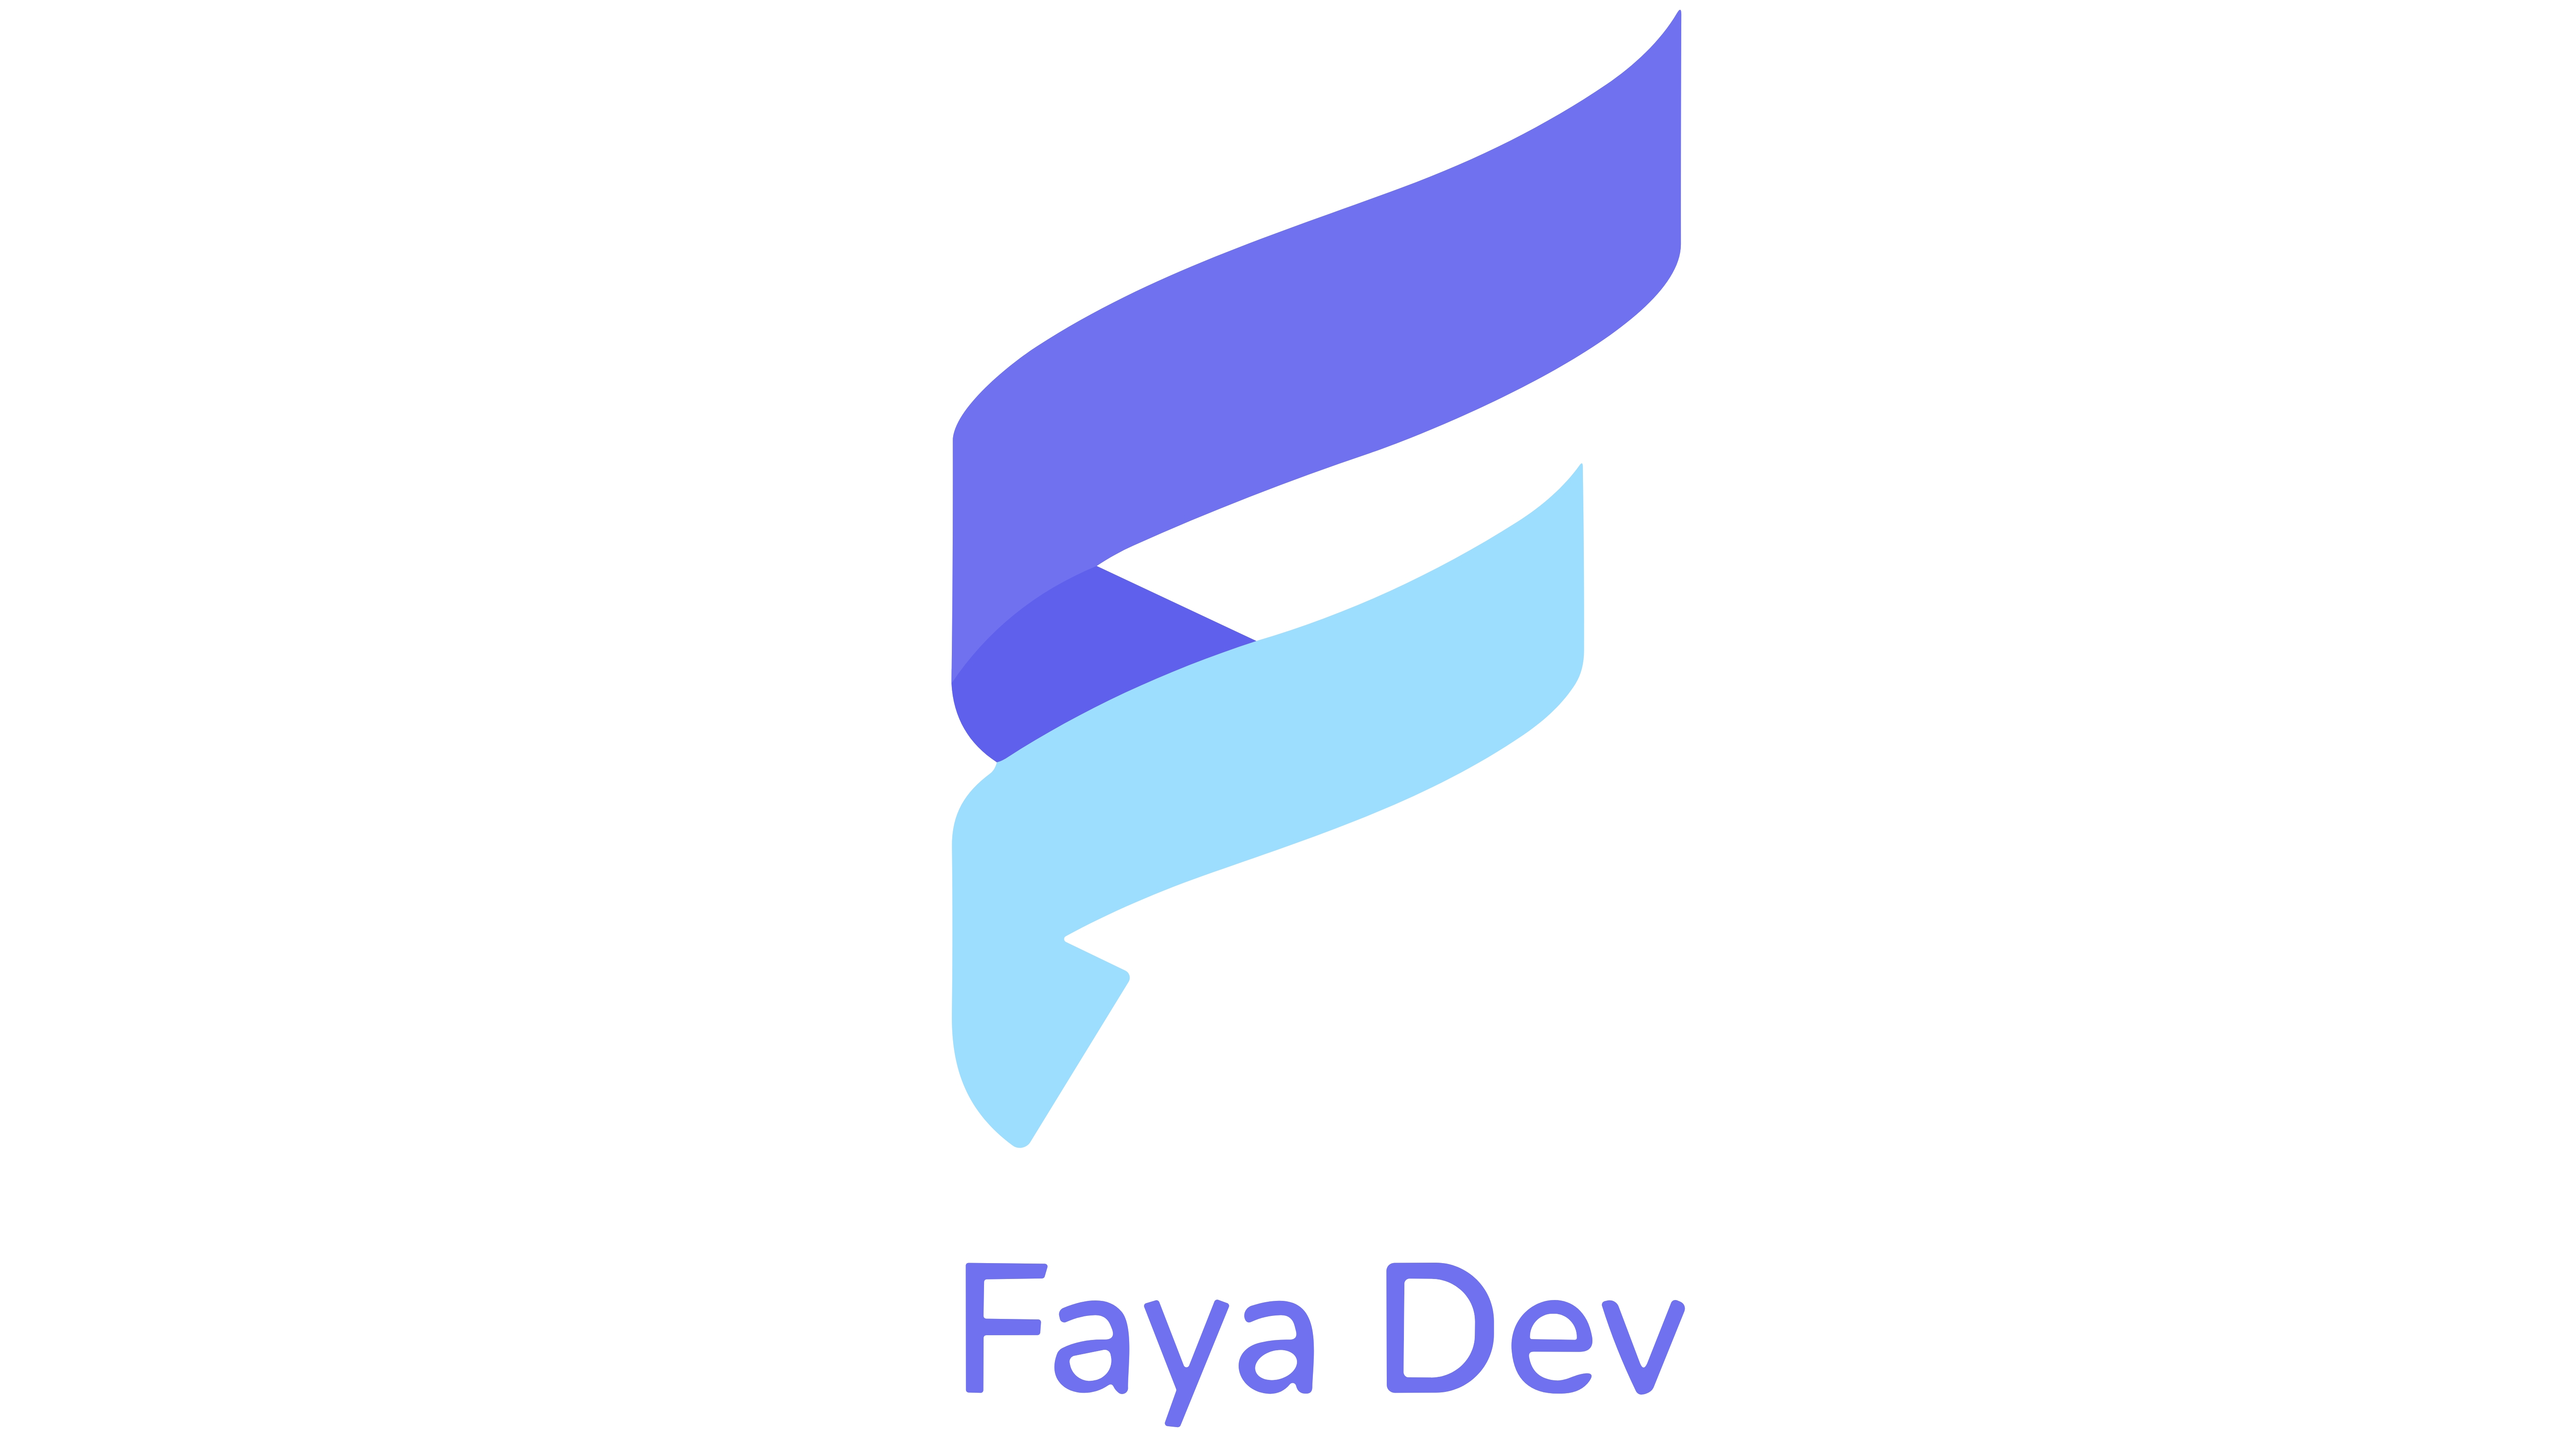 Faya Dev